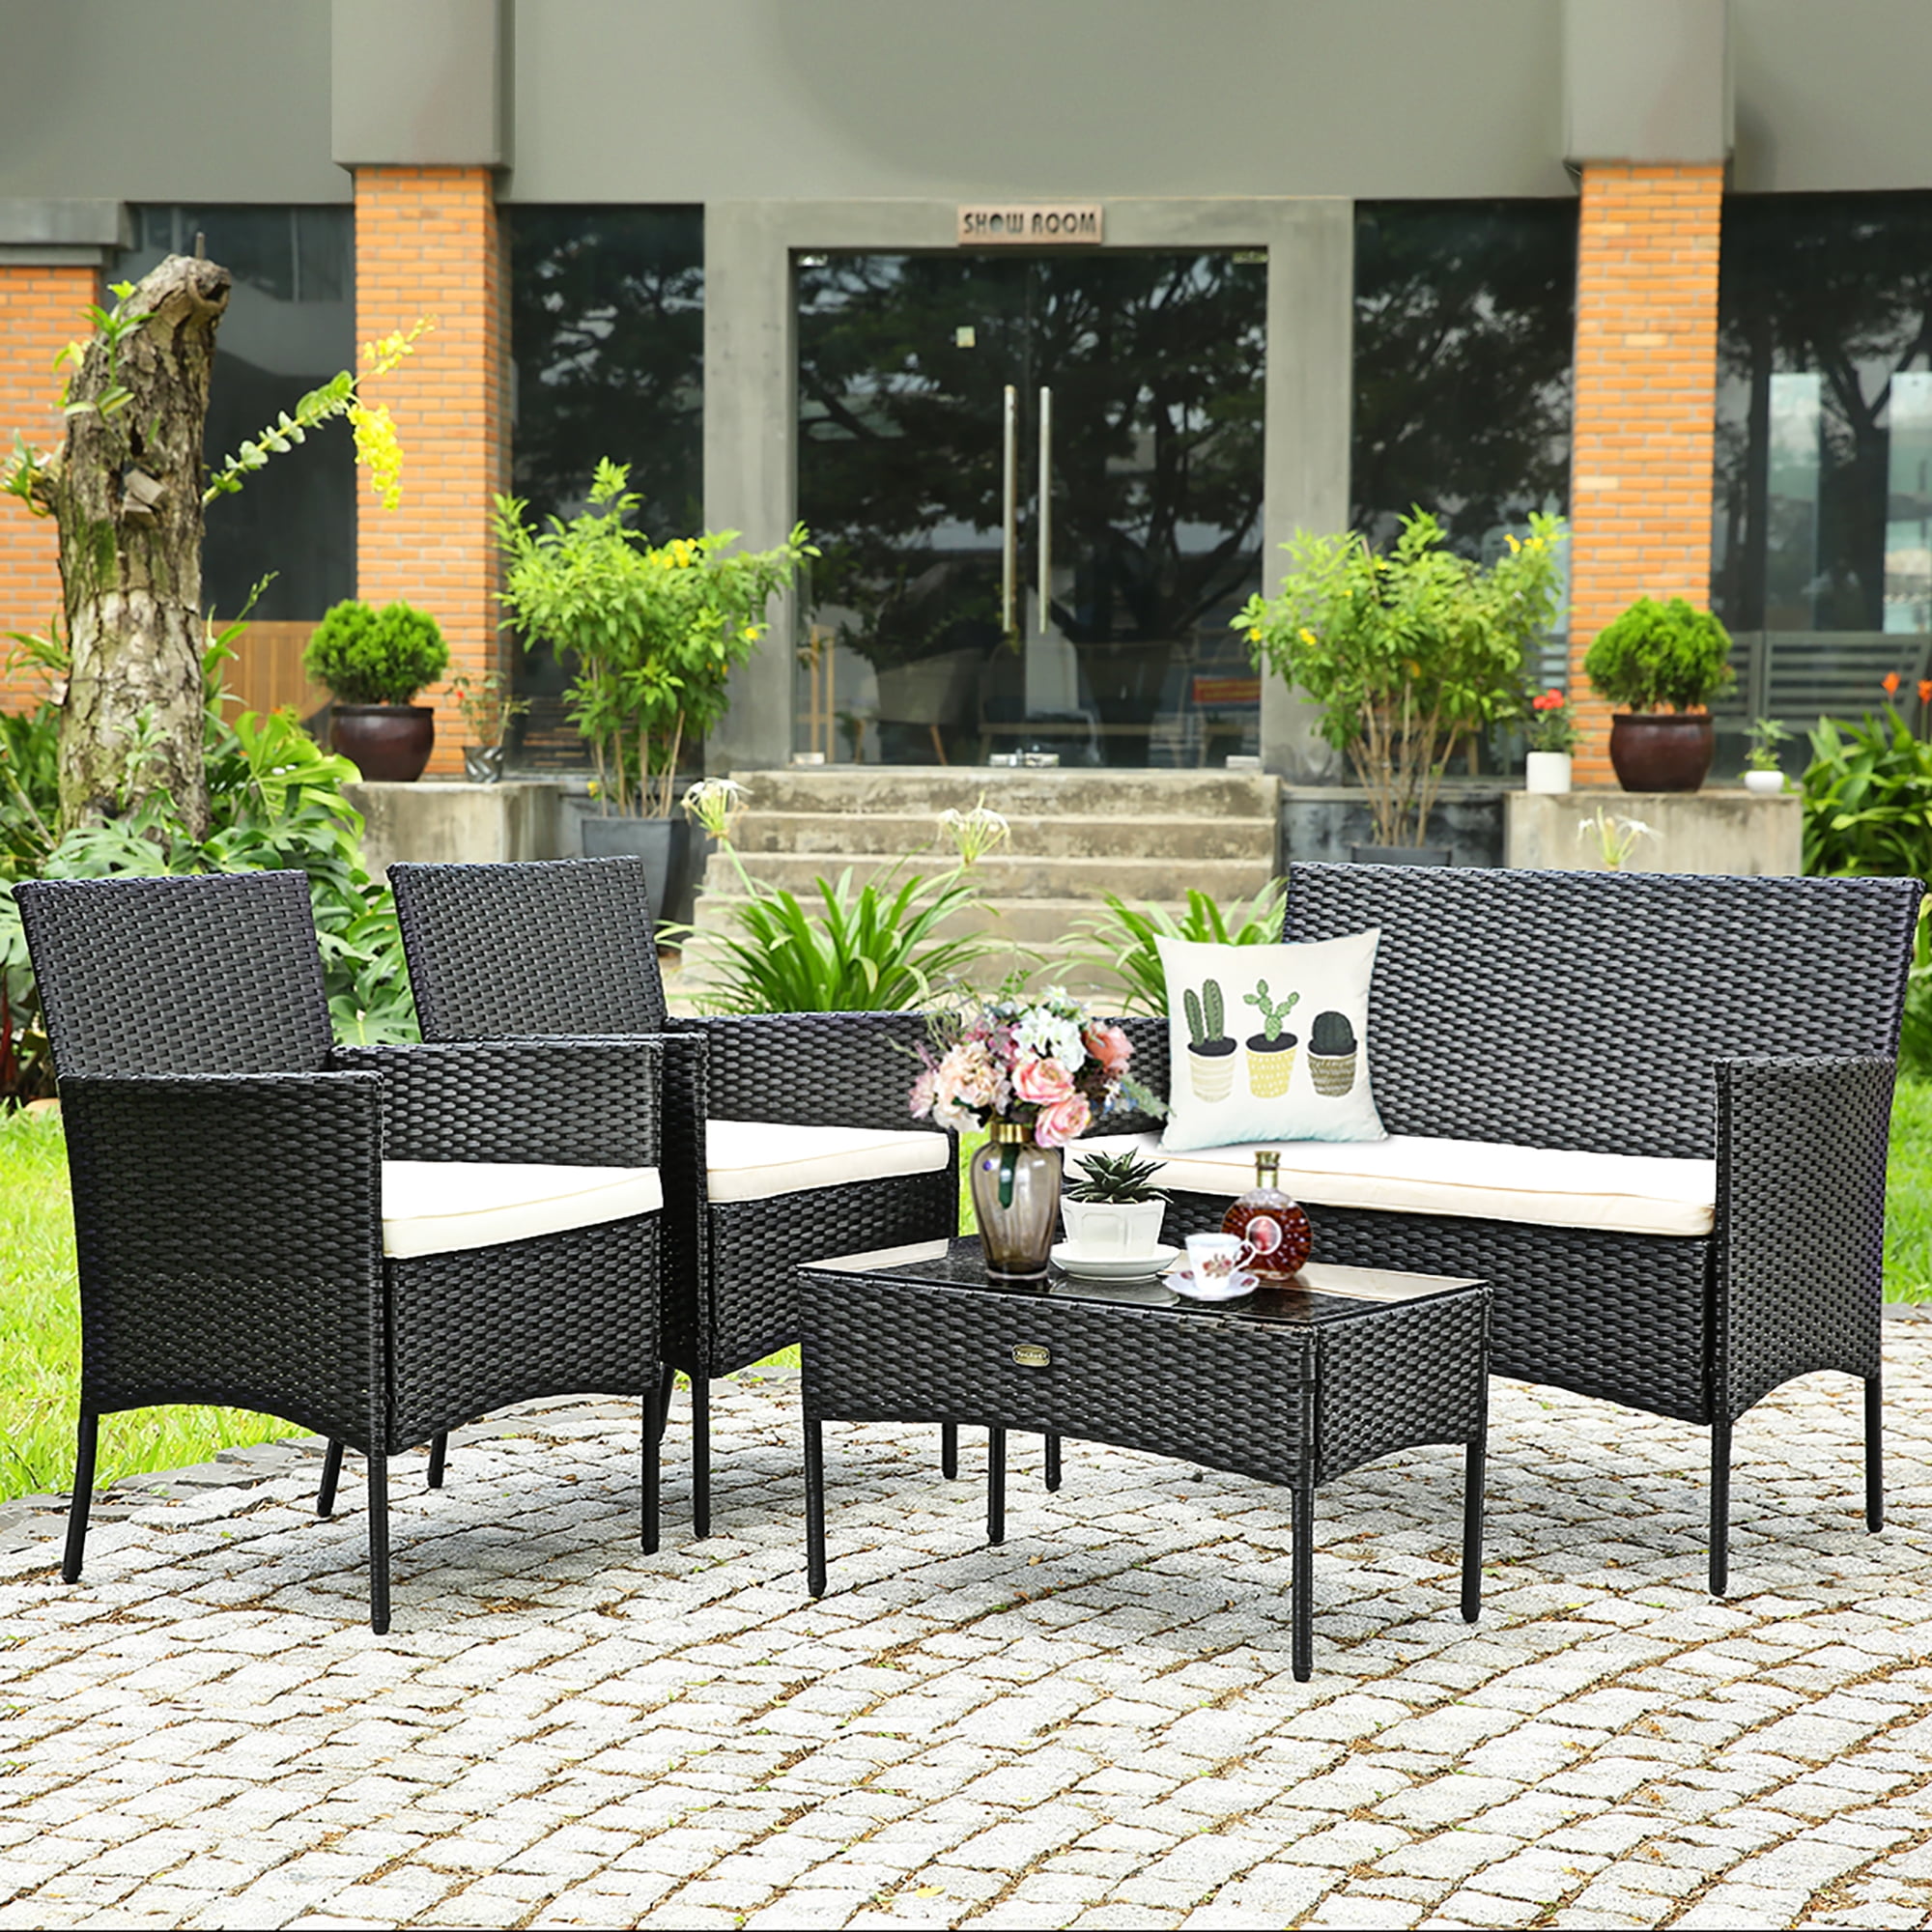 Brown/L Leisure Zone Merax 4 PCS Patio Furniture Outdoor Garden Conversation Wicker Sofa Set with Beige Cushion 